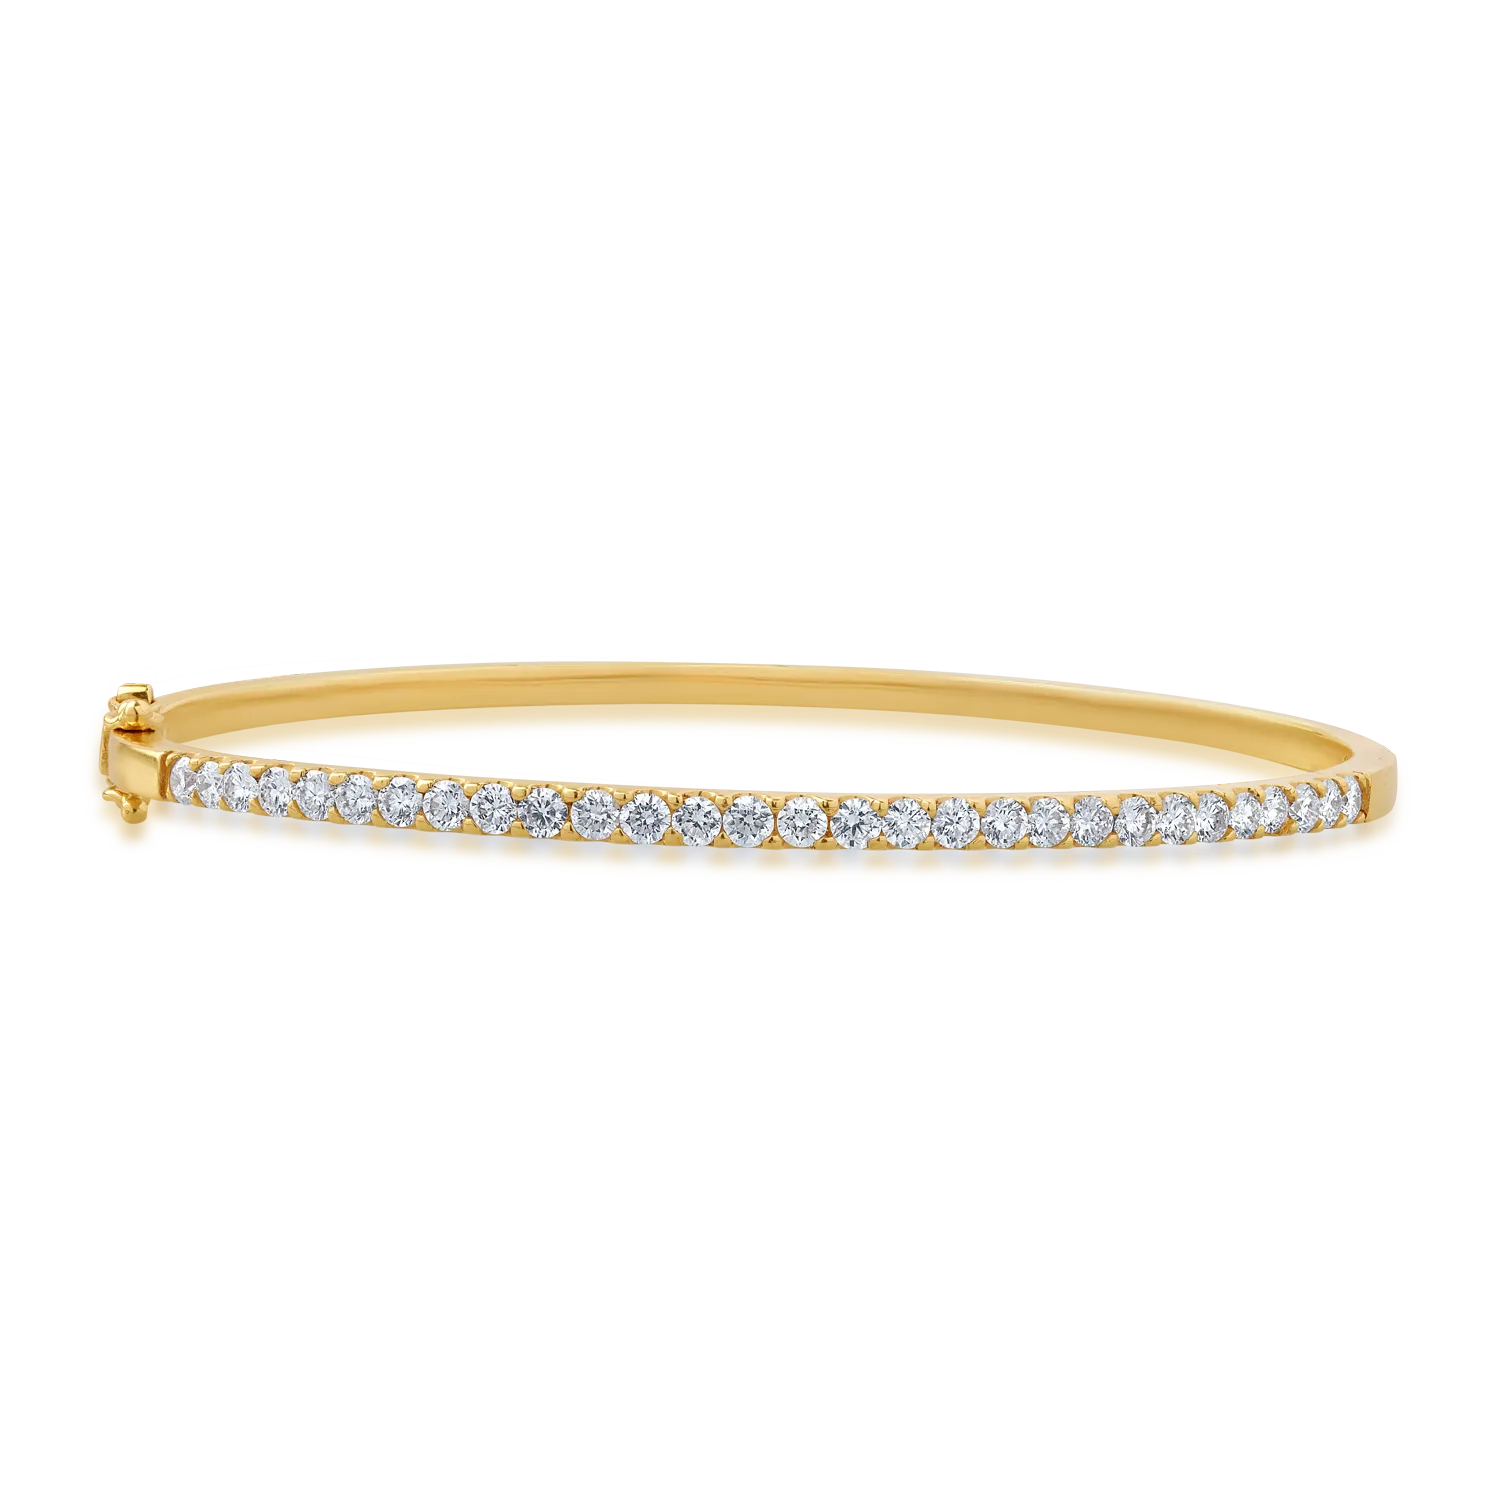 18K yellow gold bracelet with 1.33ct diamonds